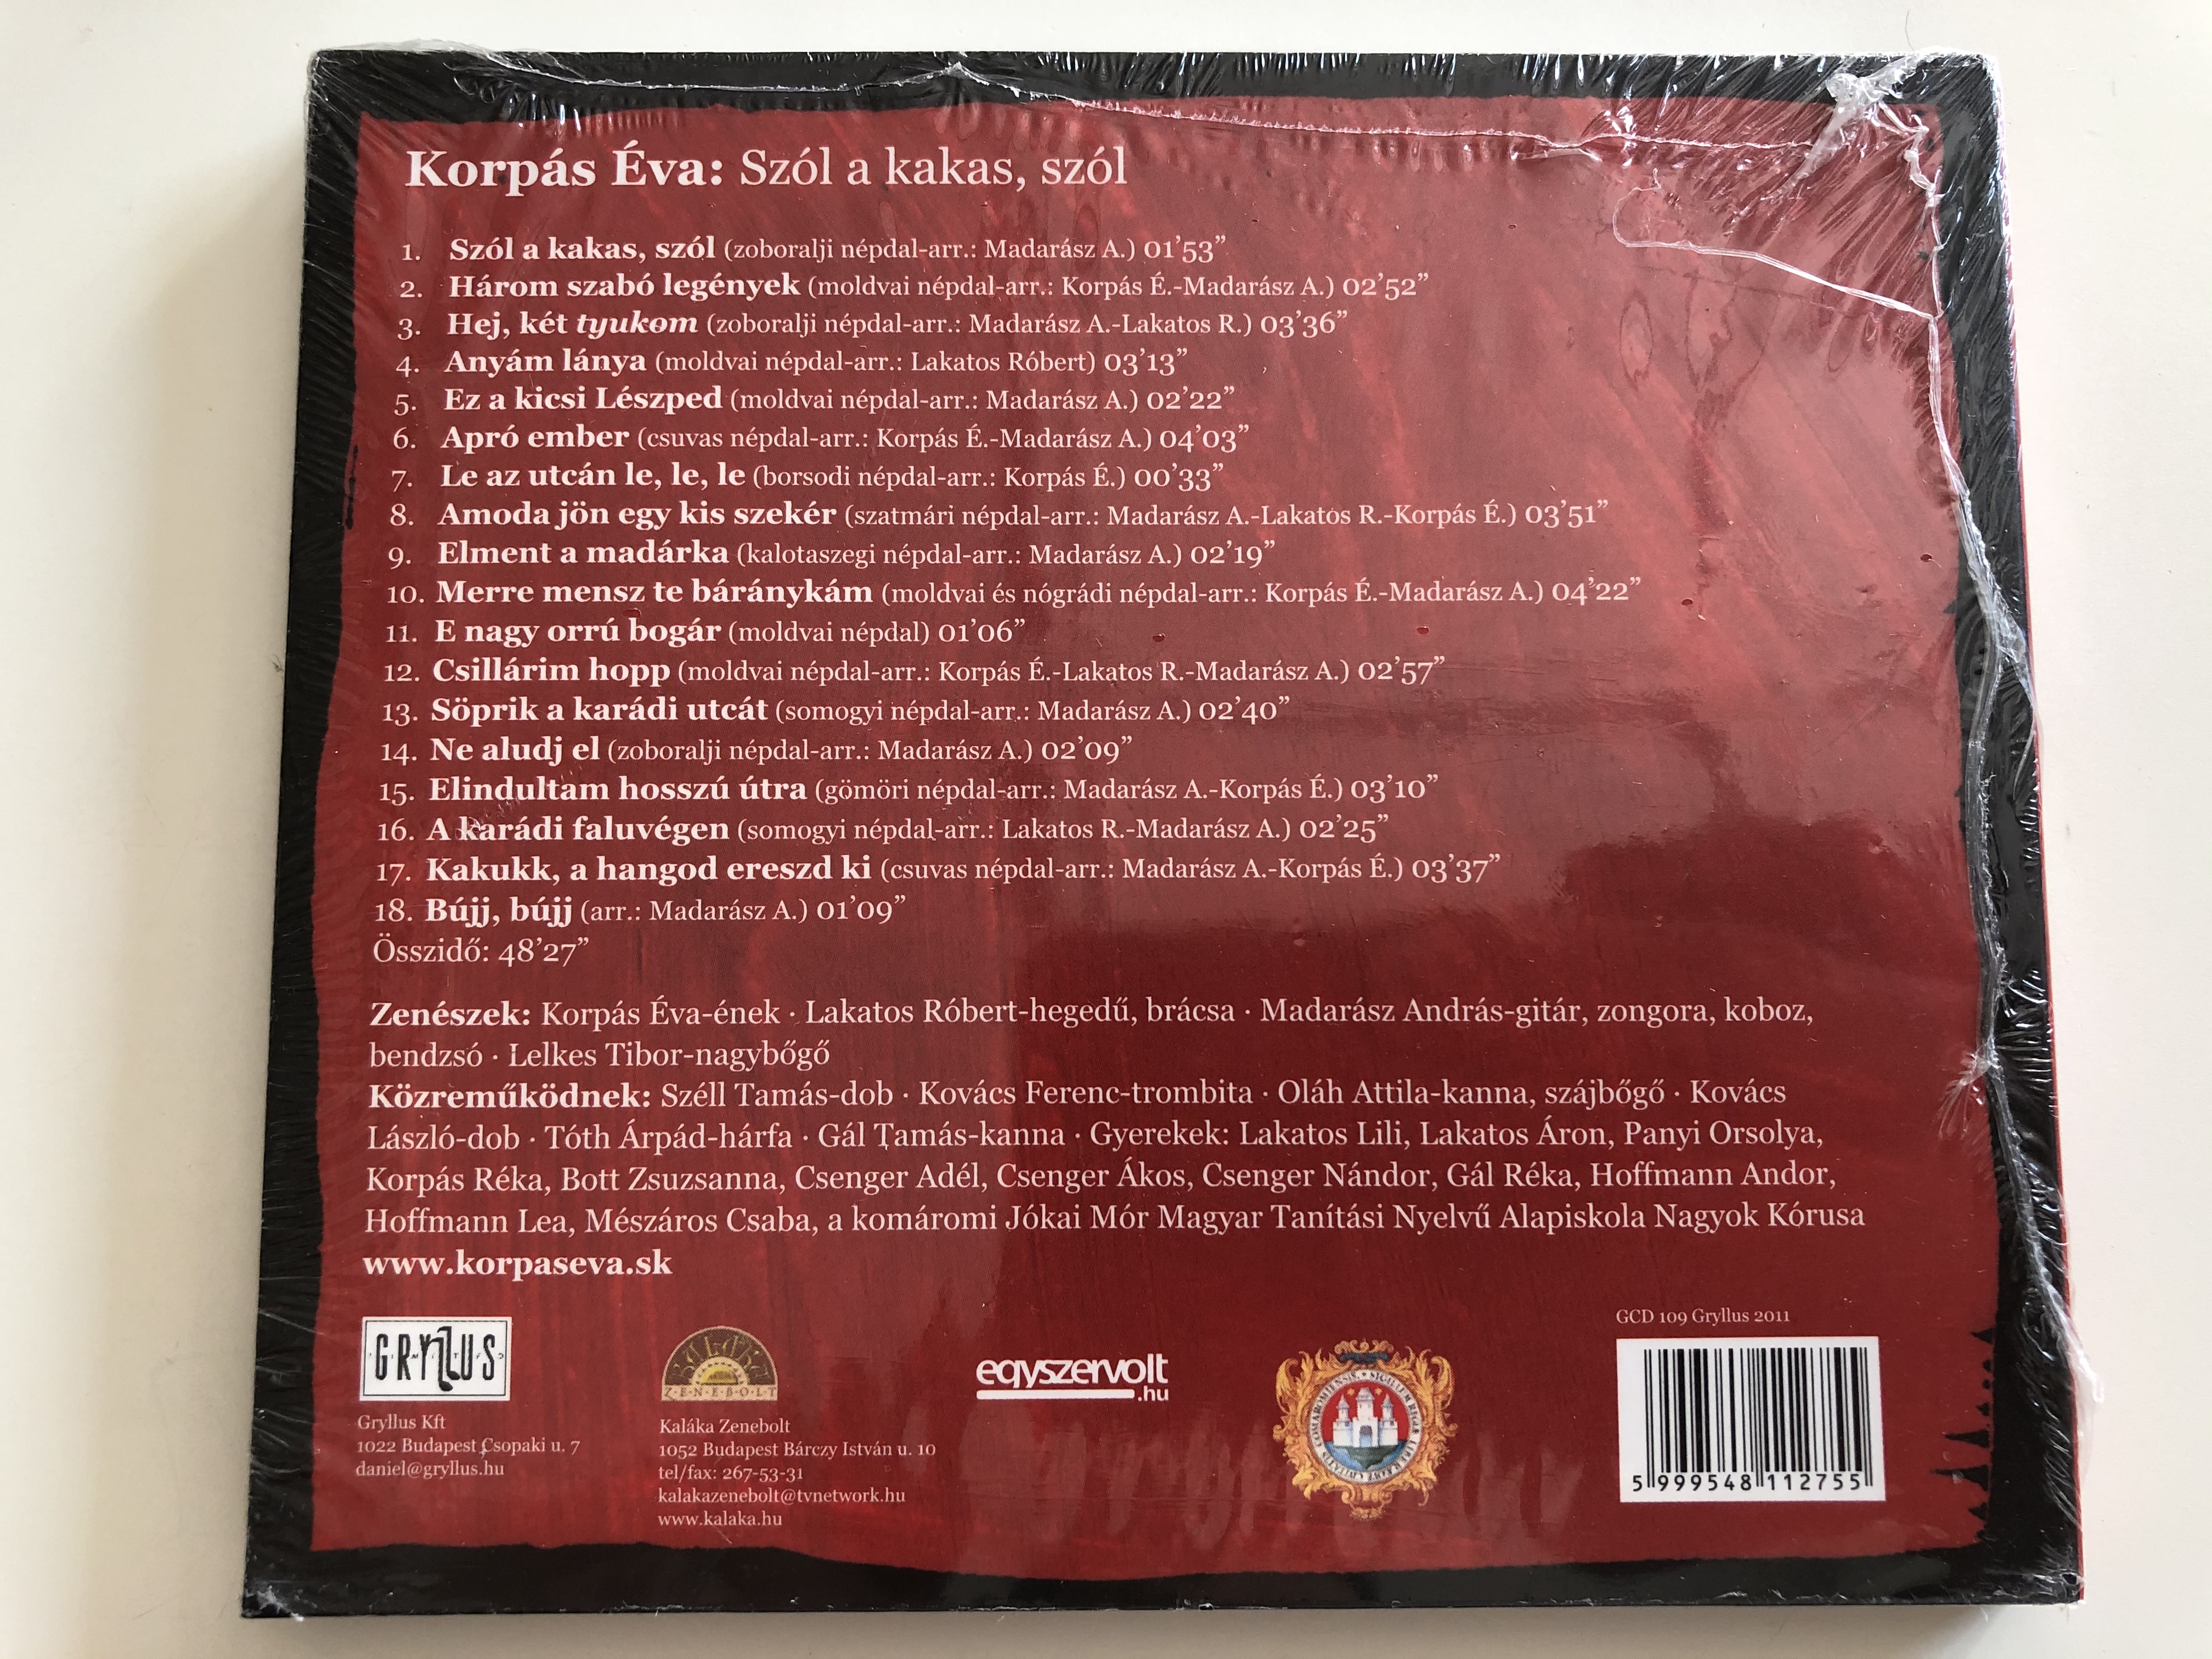 Szól a kakas, szól / Gryllus Audio CD 2011 / GCD 109 - bibleinmylanguage